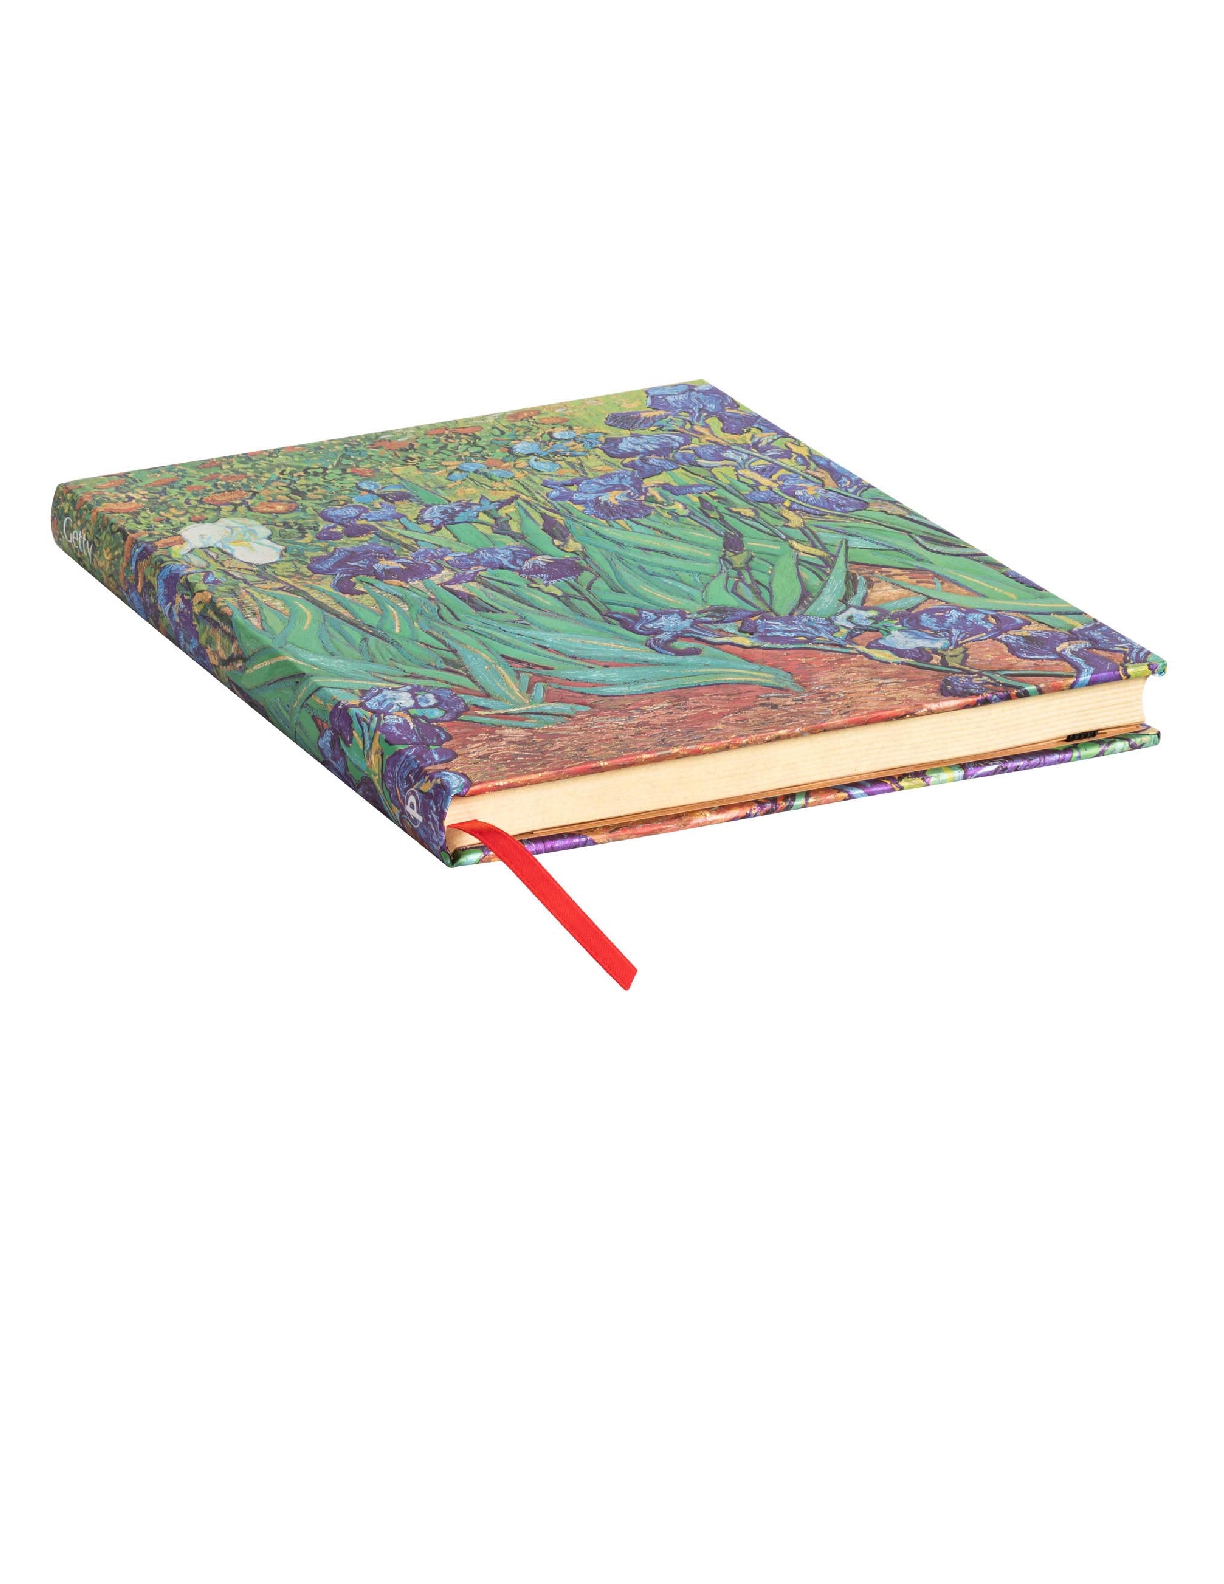 Van Gogh's Irises, Hardcover, Ultra, Unlined, Elastic Band Closure, 144 Pg, 120 GSM